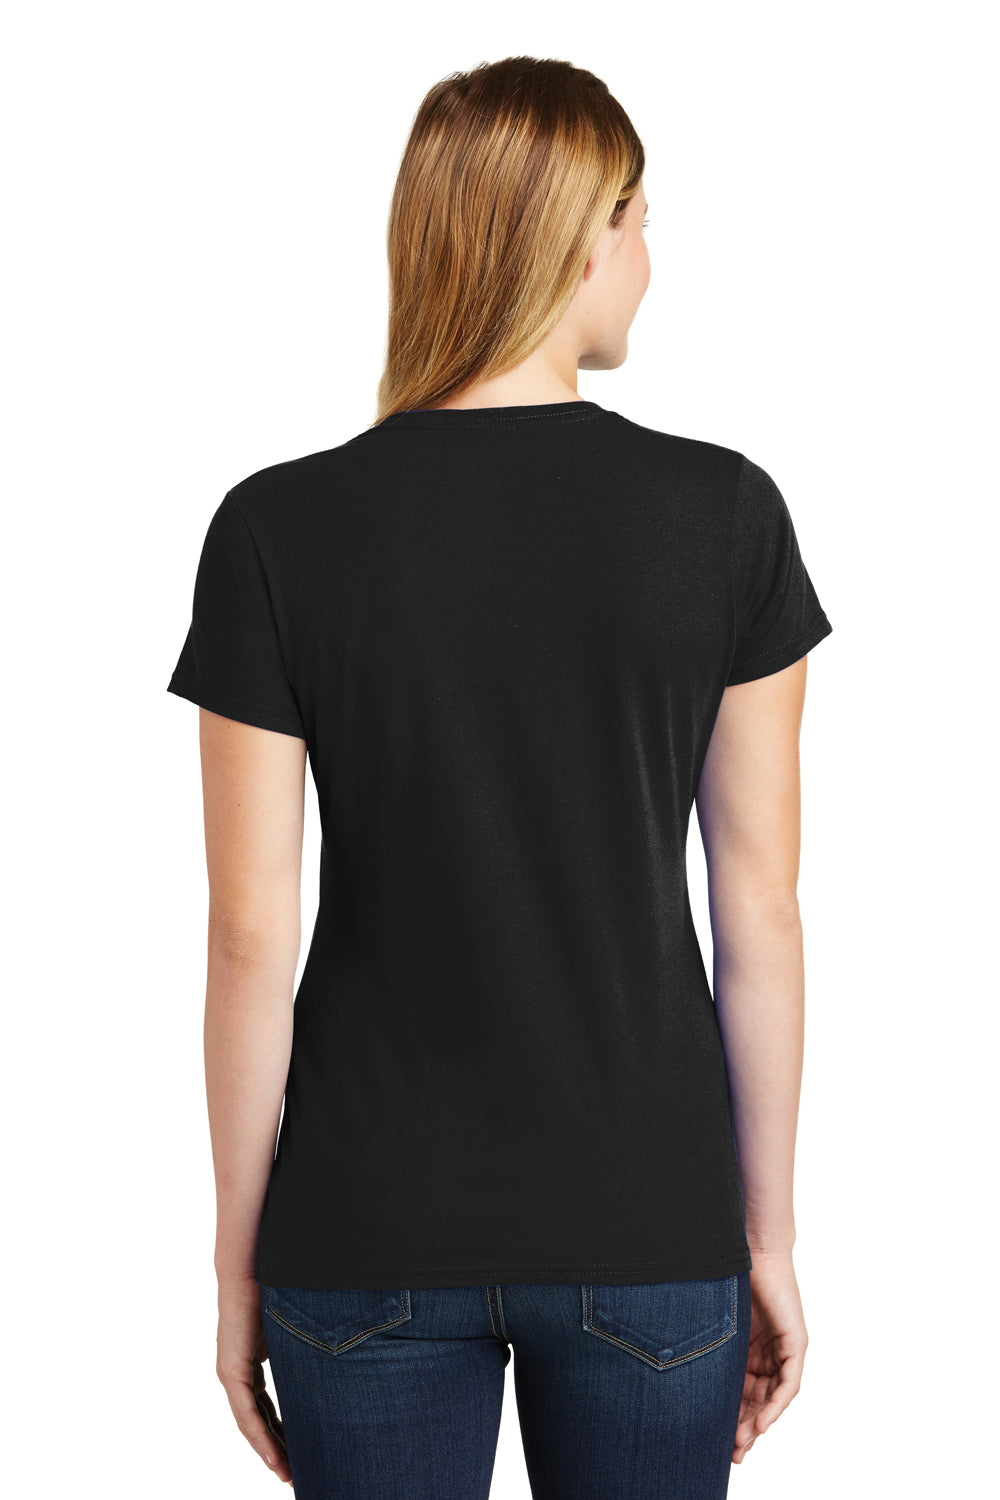 Port & Company LPC450 Womens Fan Favorite Short Sleeve Crewneck T-Shirt Black Back